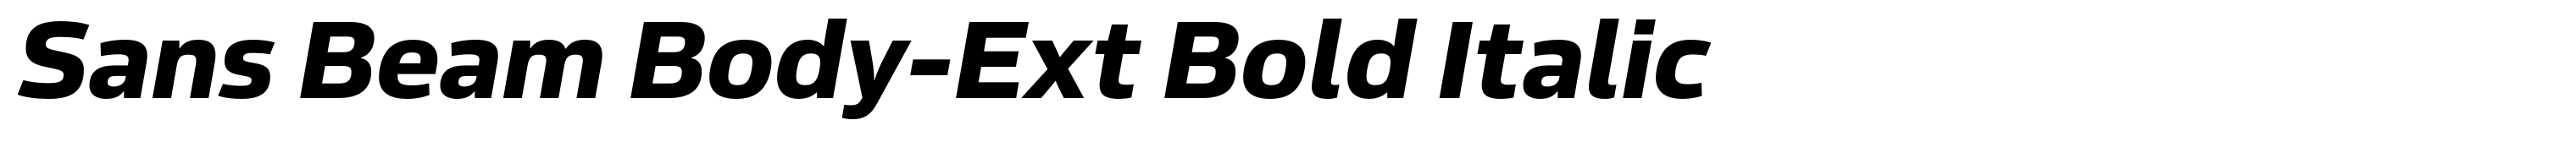 Sans Beam Body-Ext Bold Italic